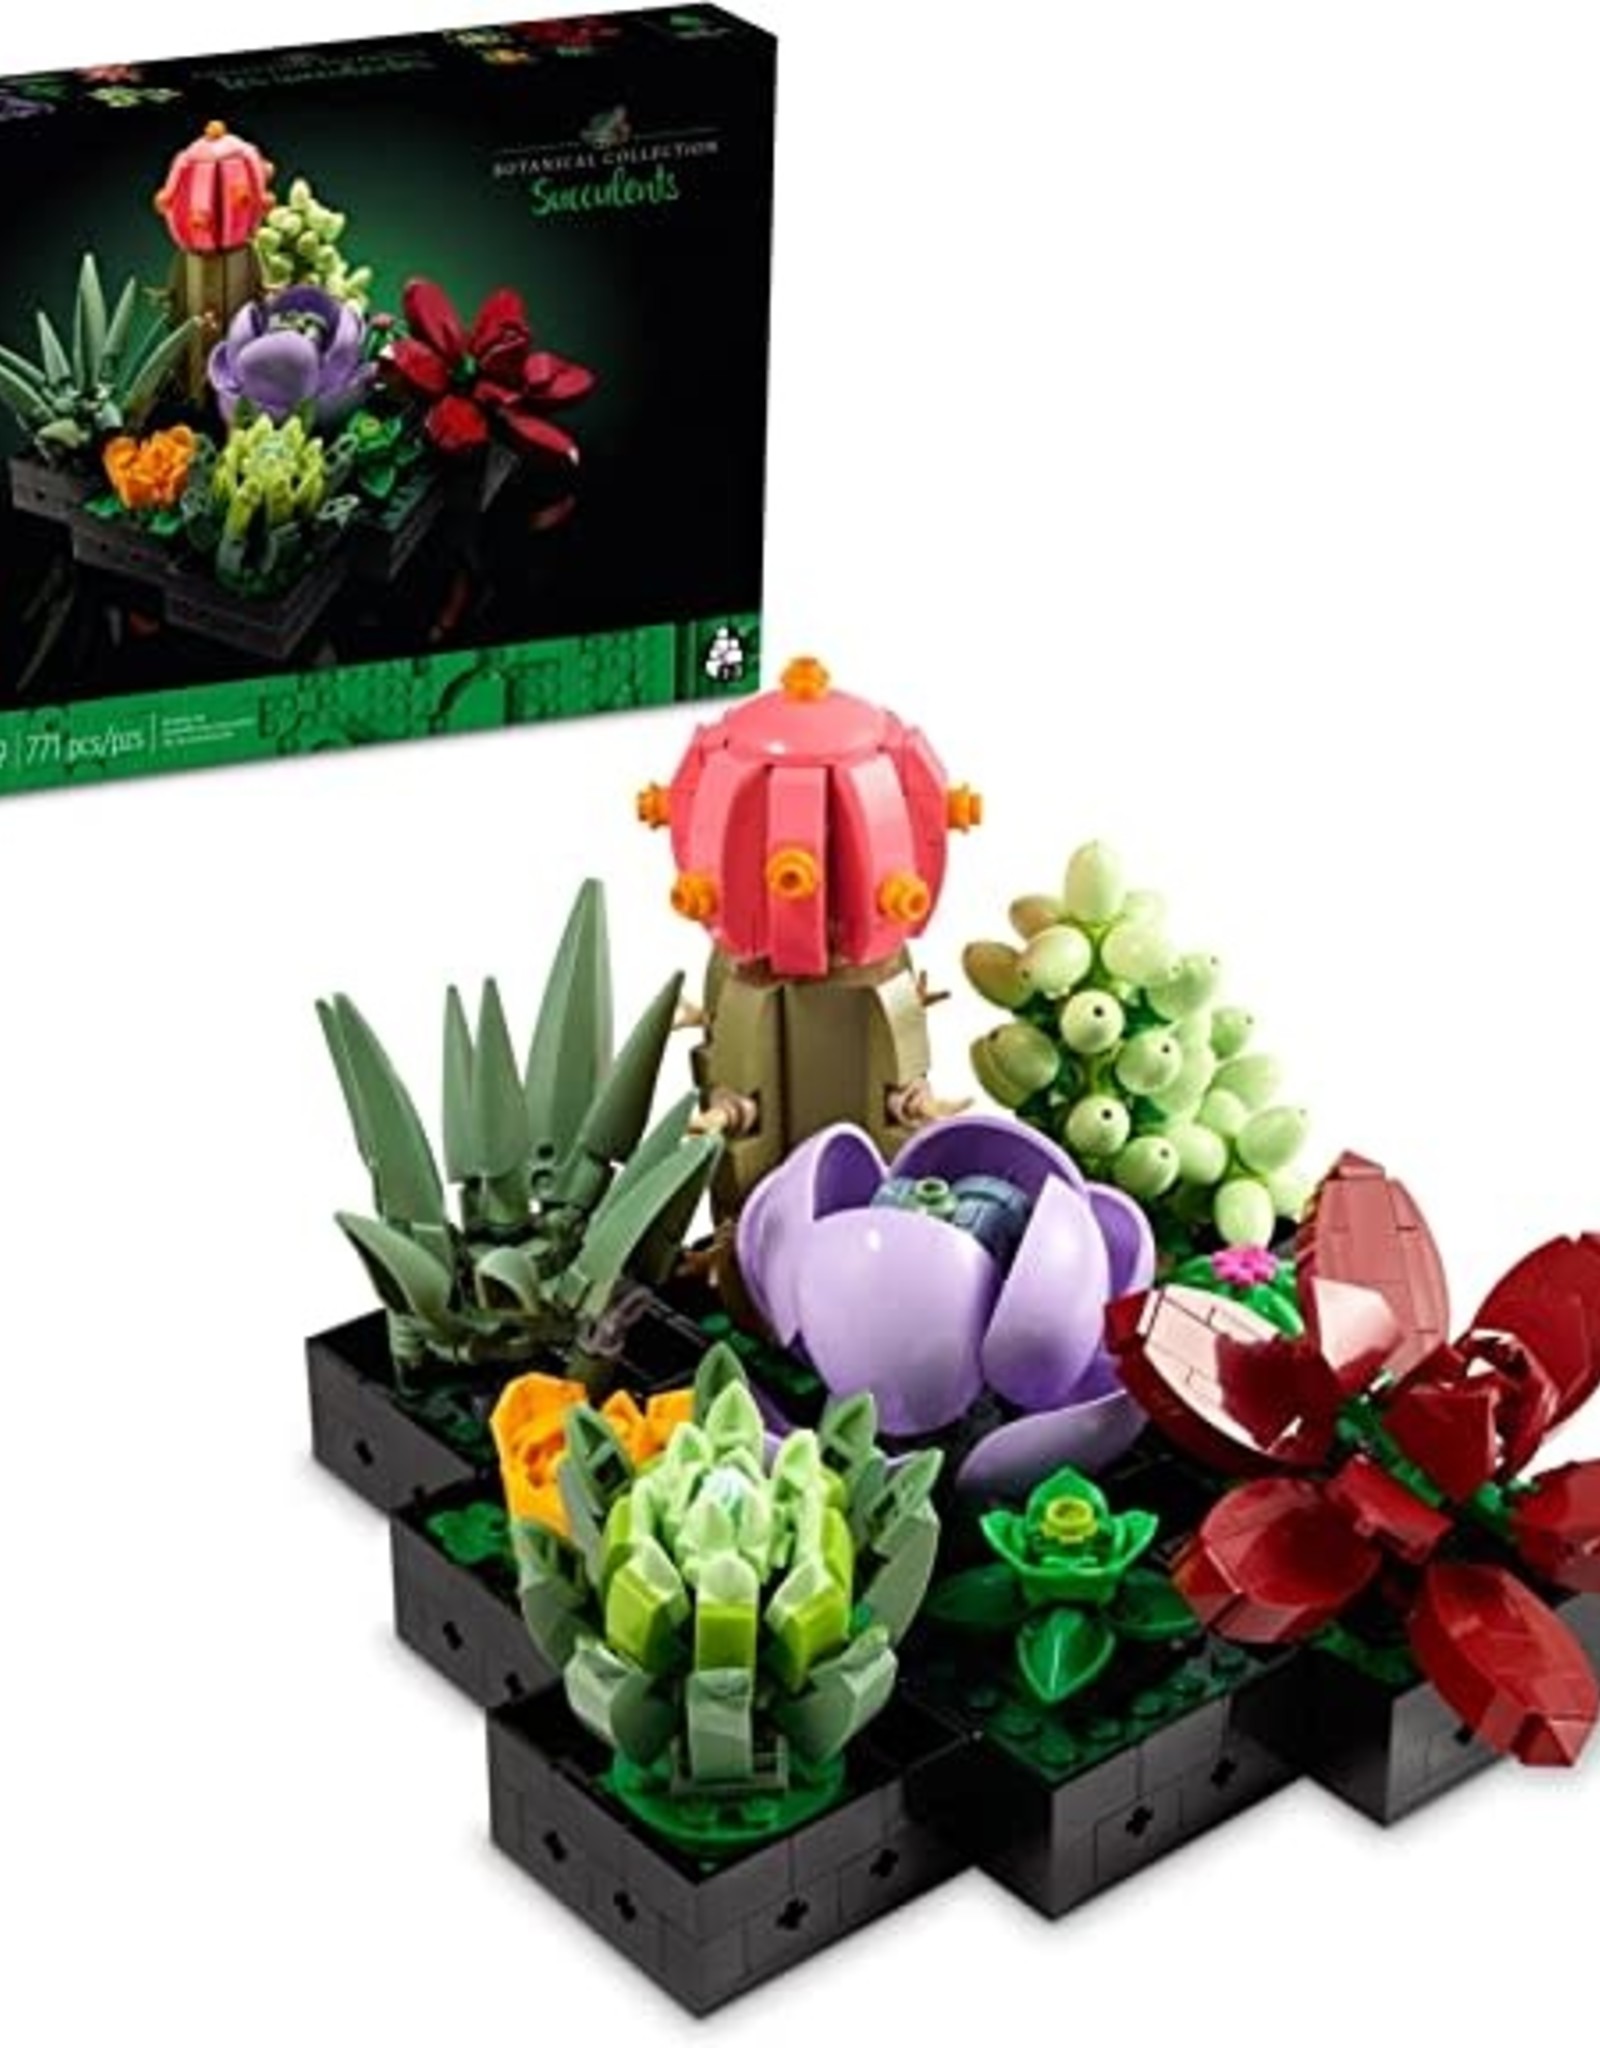 LEGO 10309 Succulents